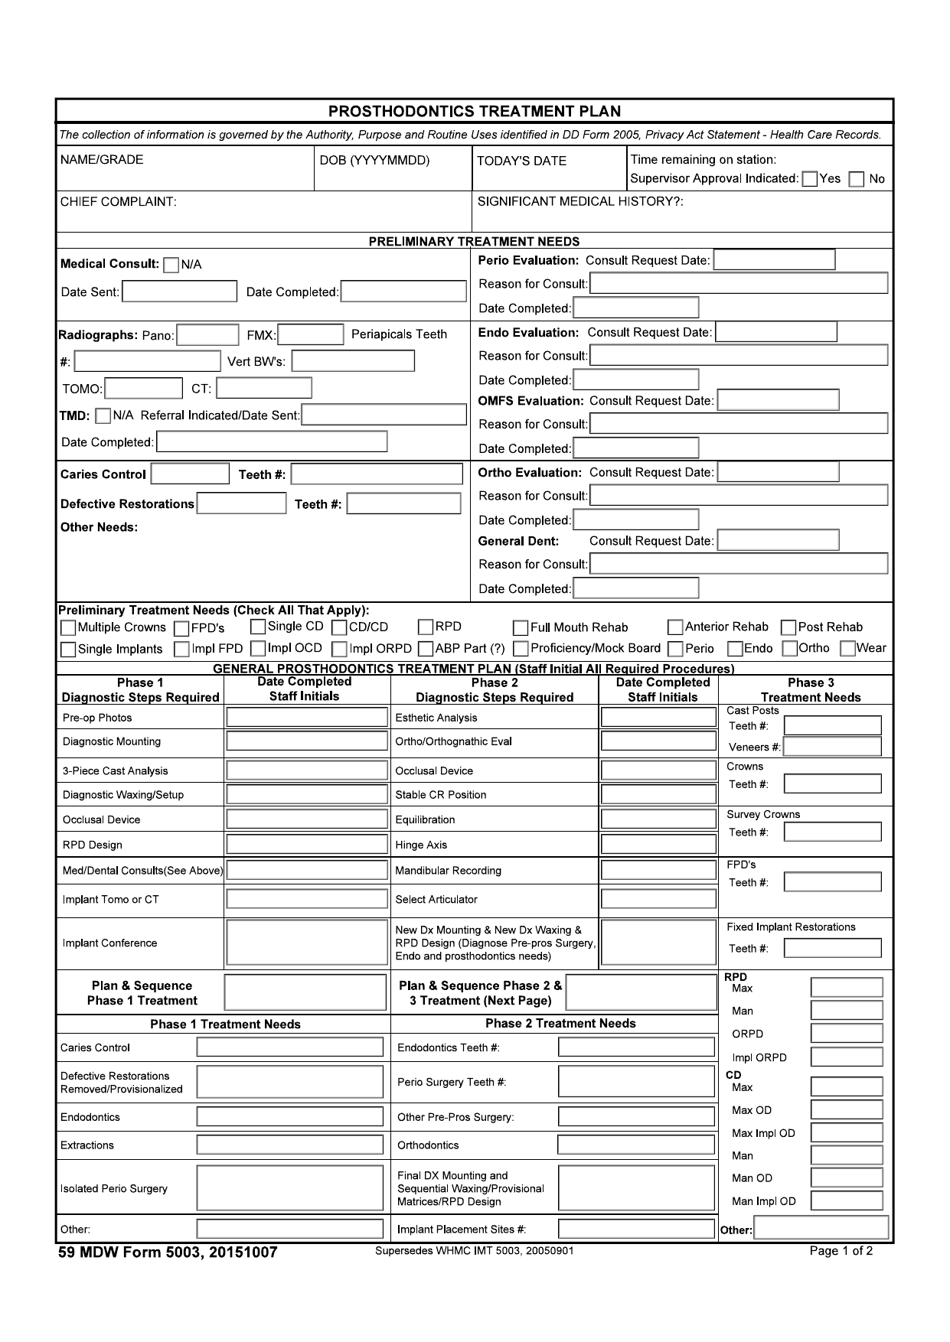 59 MDW Form 5003 Prosthodontics Treatment Plan, Page 1